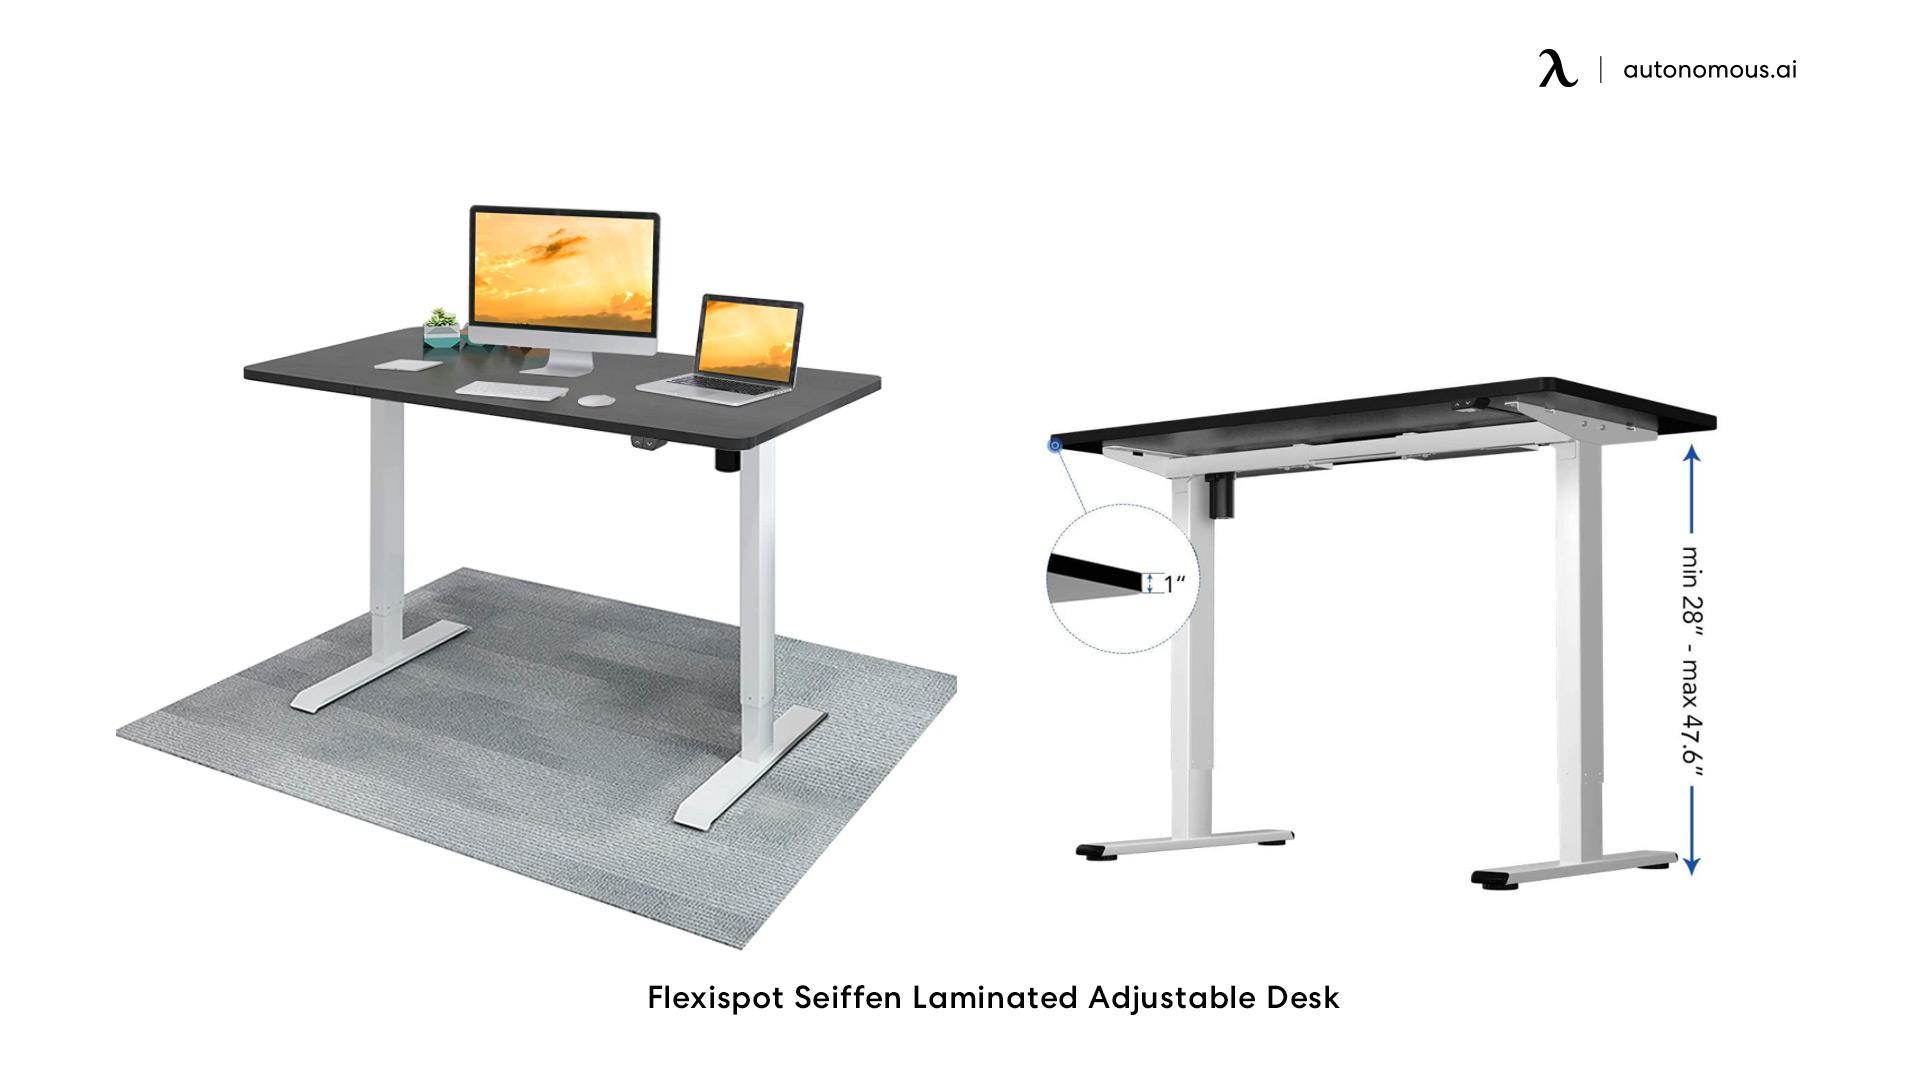 Flexispot Seiffen Laminated Adjustable Desk Deals